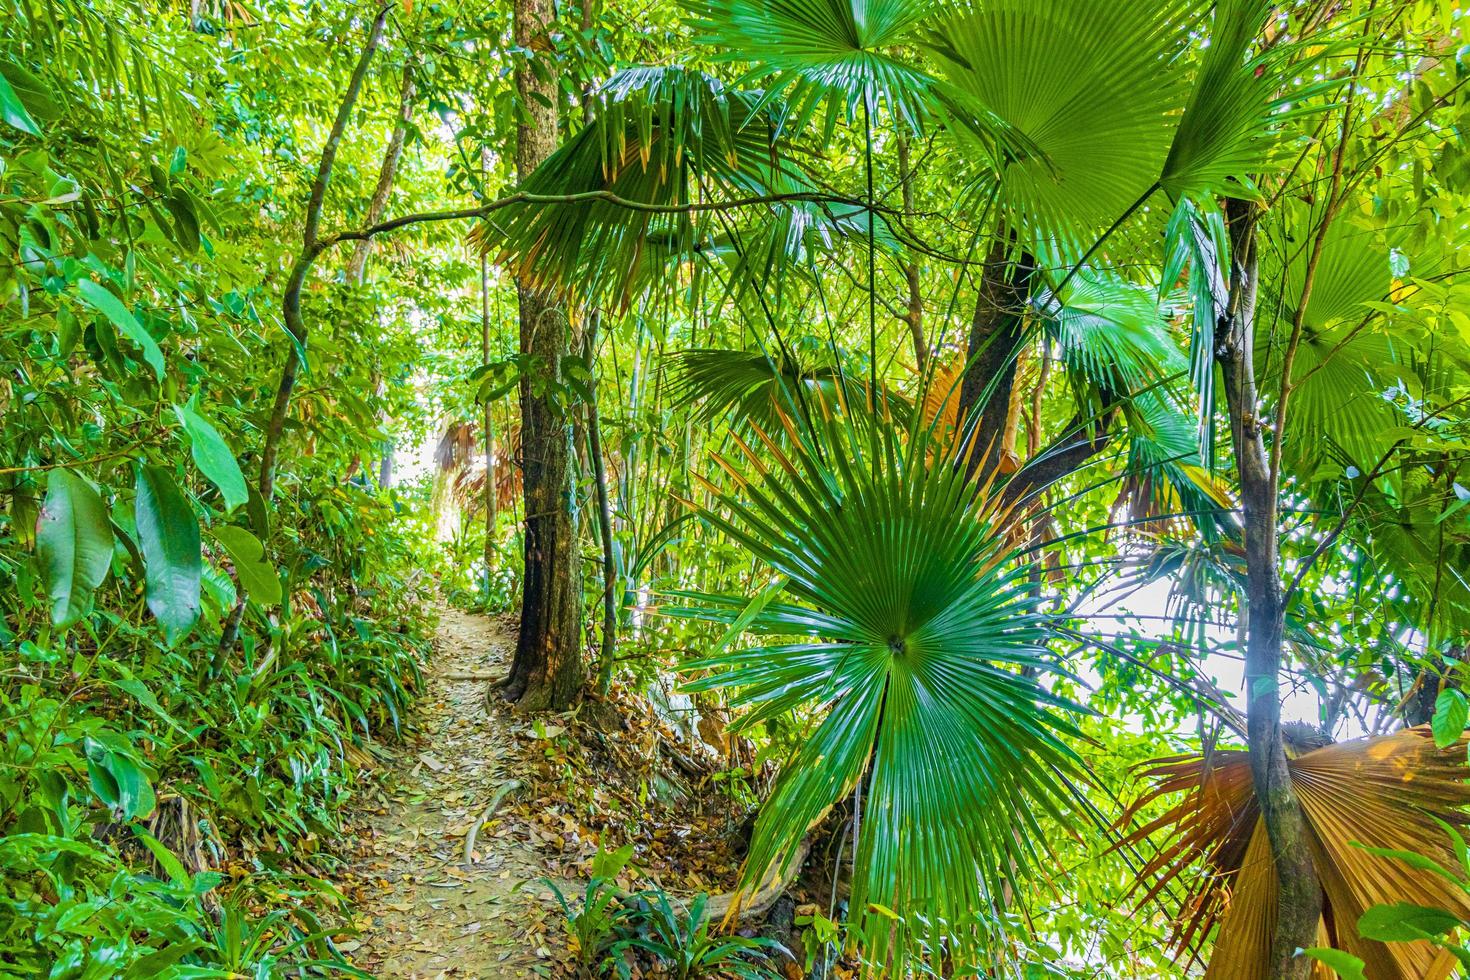 caminhada trilha natural na selva tropical floresta lamru nationalpark tailândia. foto